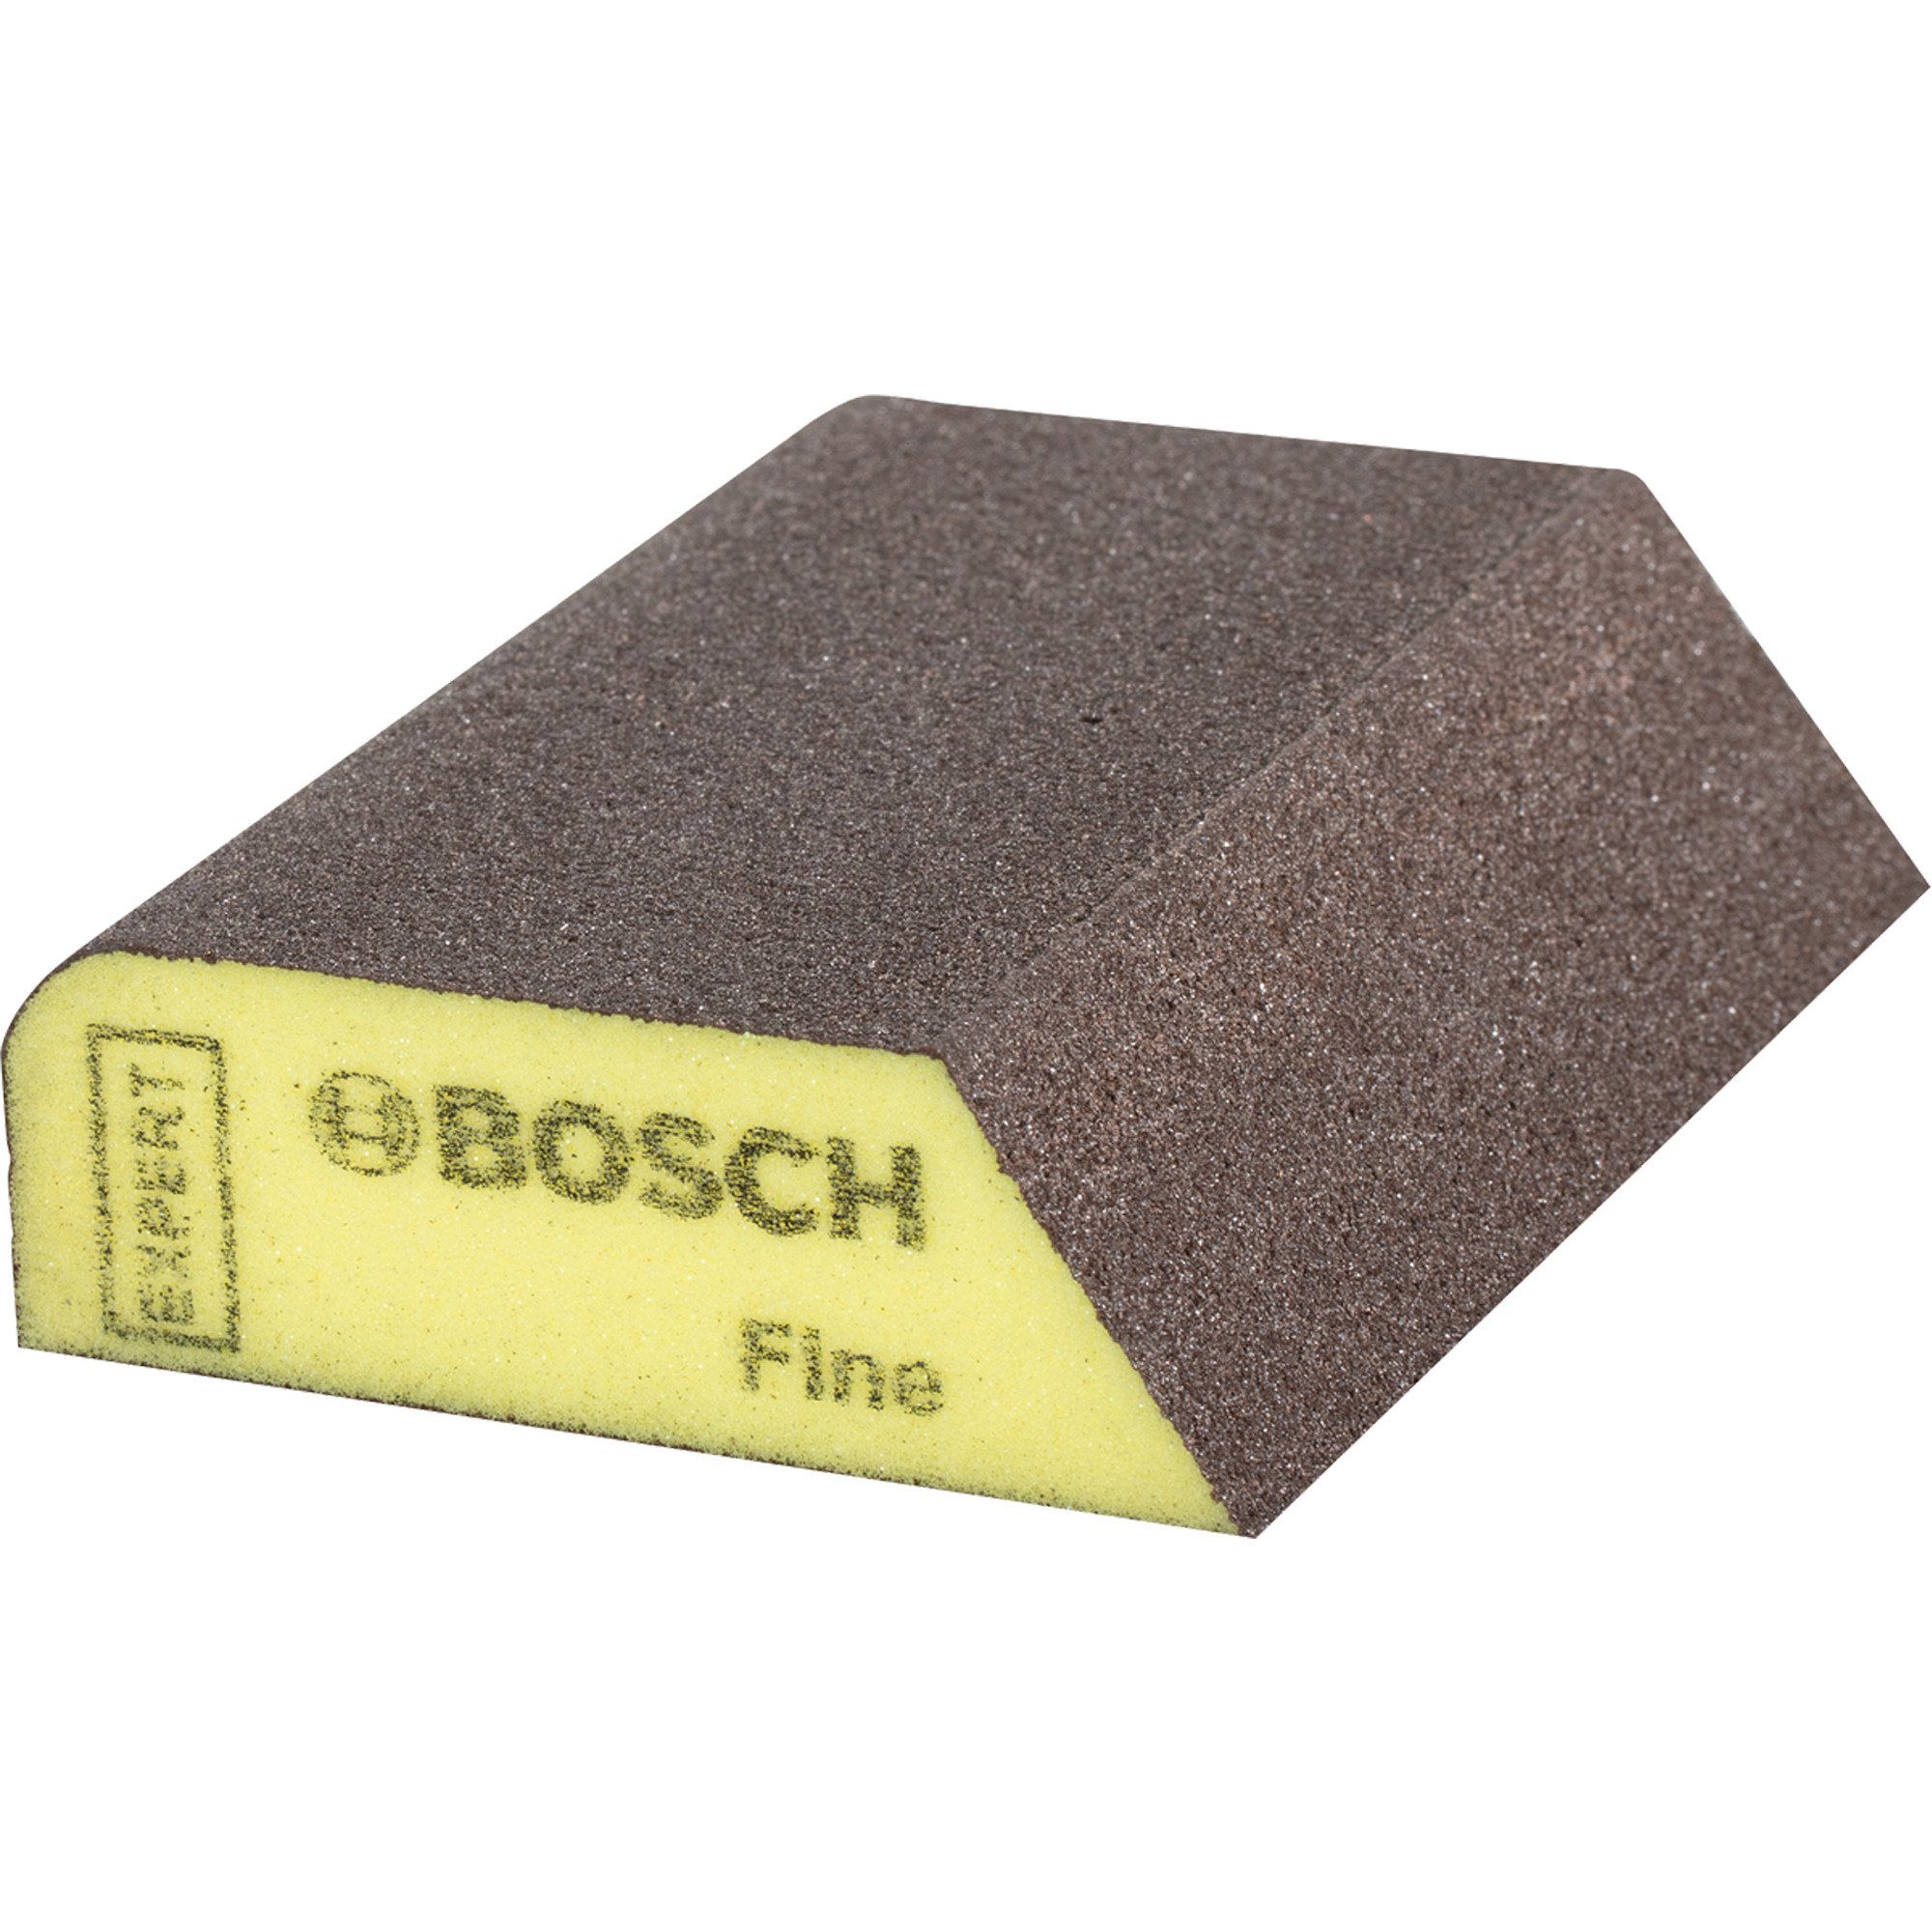 BOSCH Schleifscheibe Bosch S470 Schleifblock Combi Expert Professional